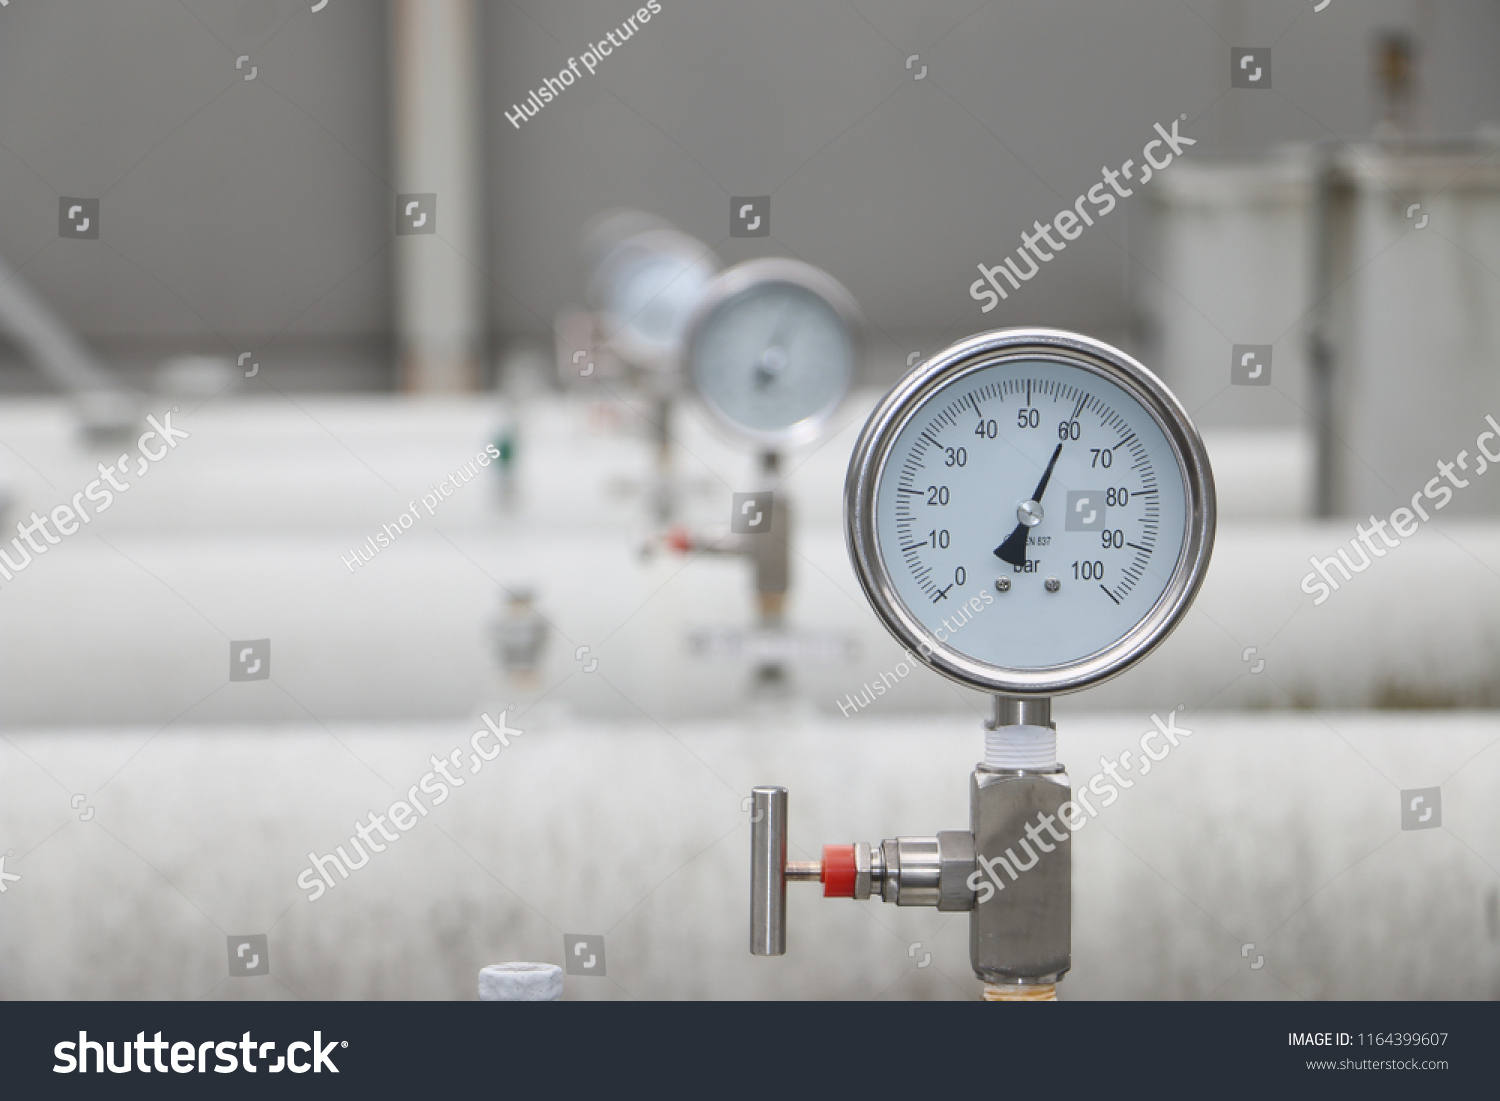 measuring the pressure on the manometer or pressure gauge industrial #1164399607